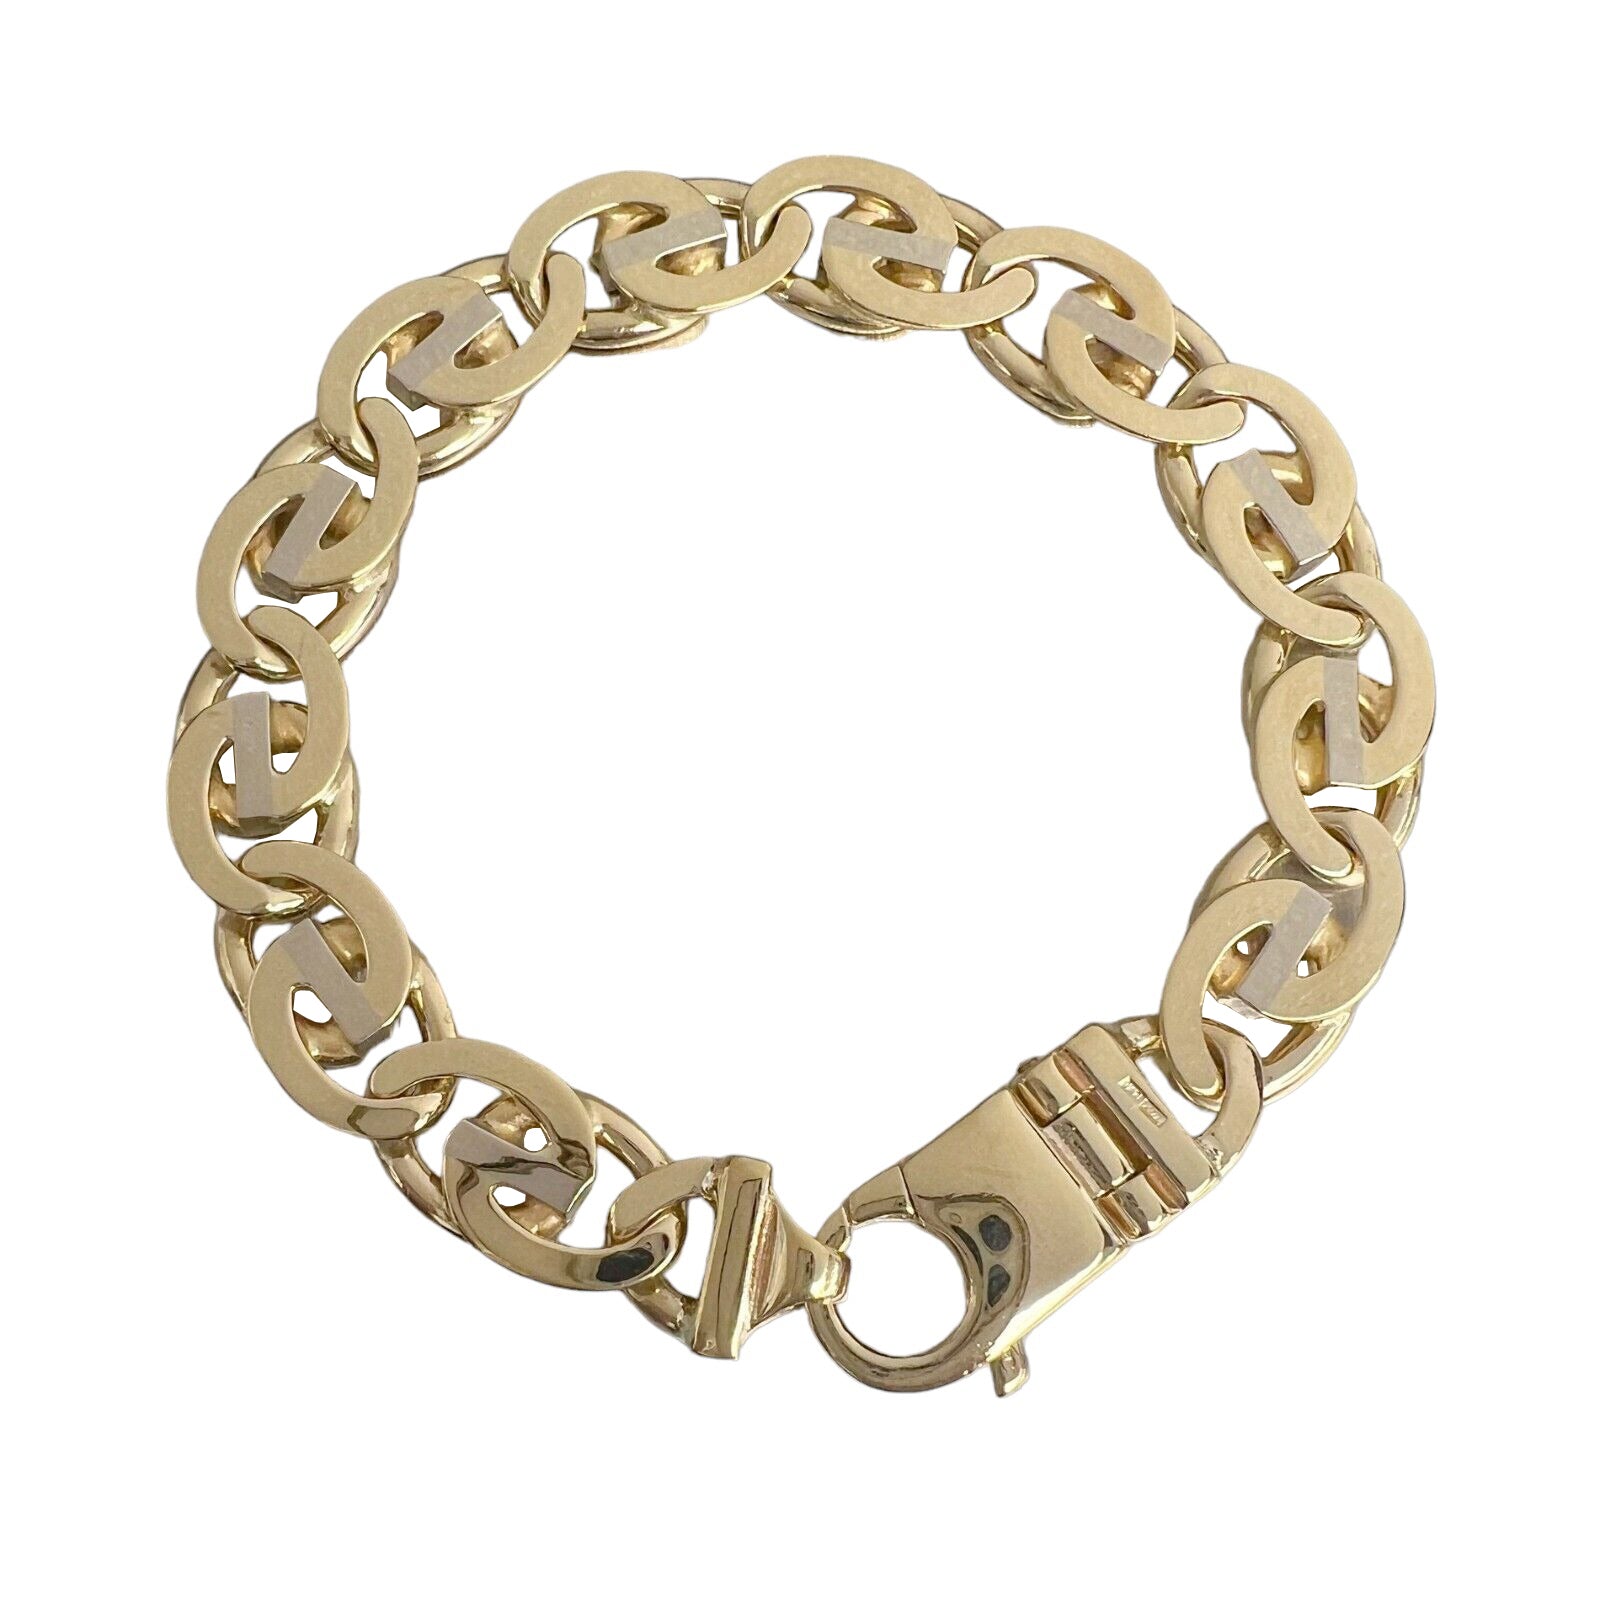 2 Gram Gold Bracelet White Stone Collections Shop Online BRAC731